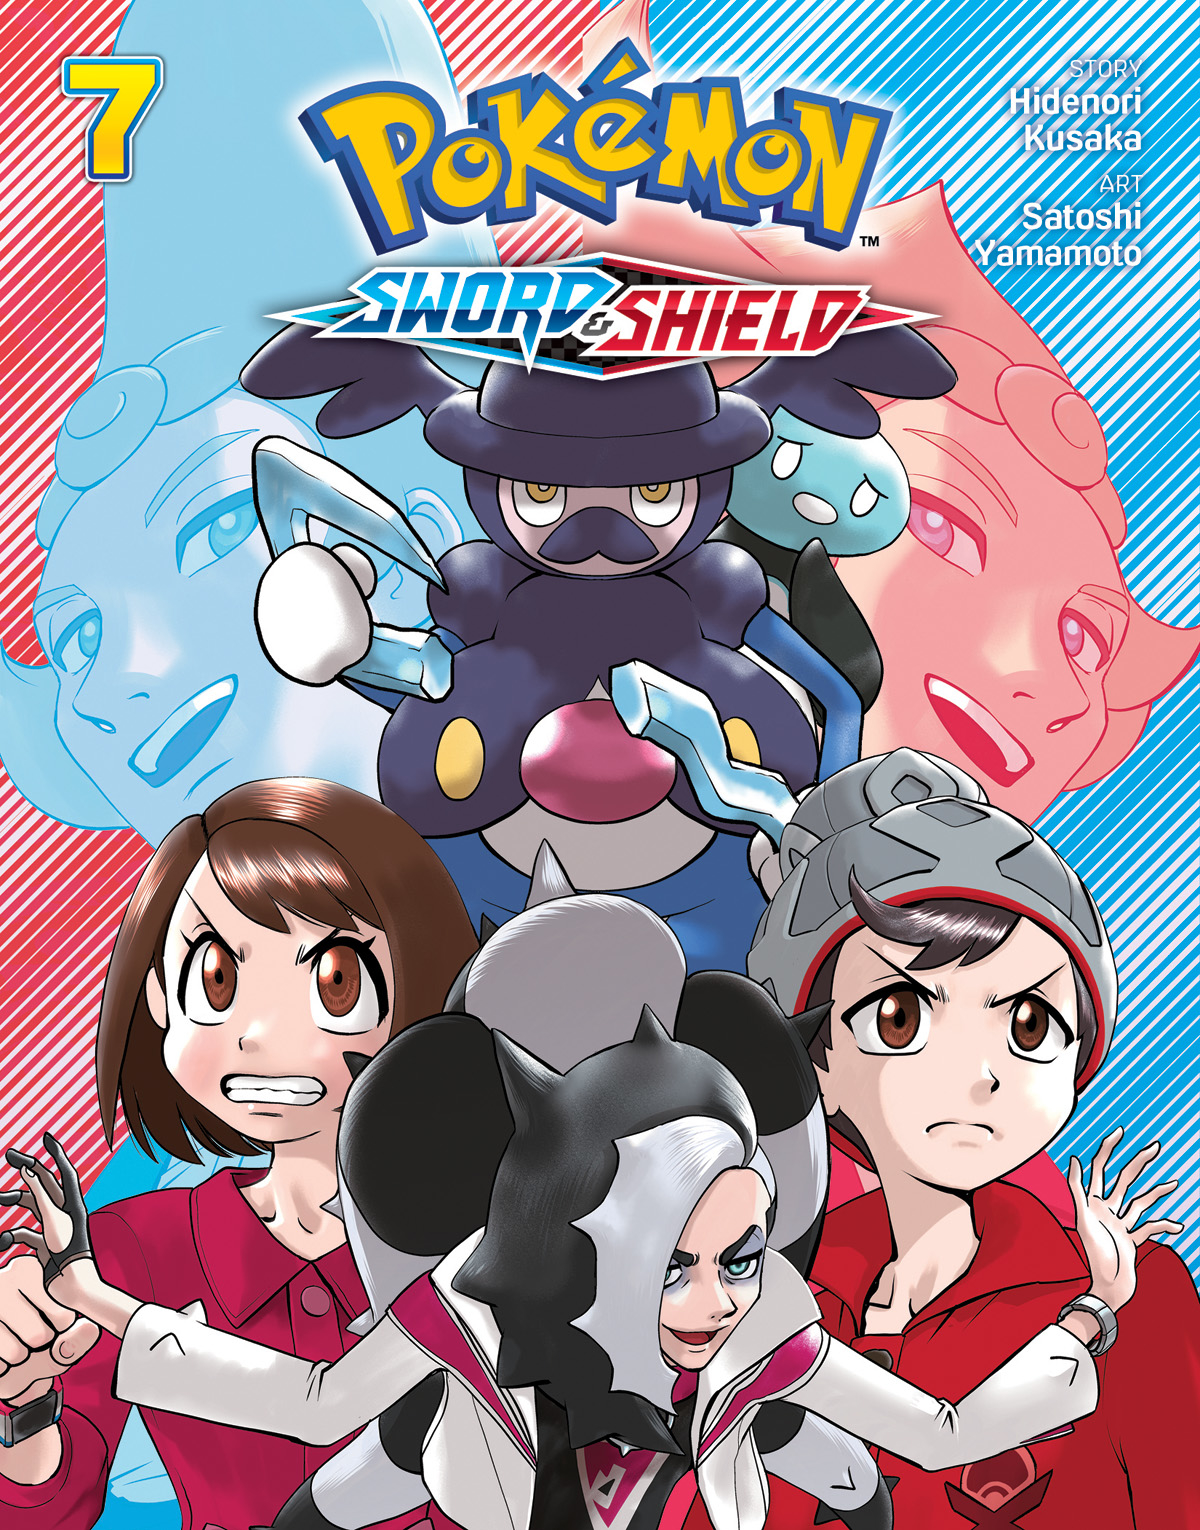 Pokémon Sword & Shield Manga Volume 7